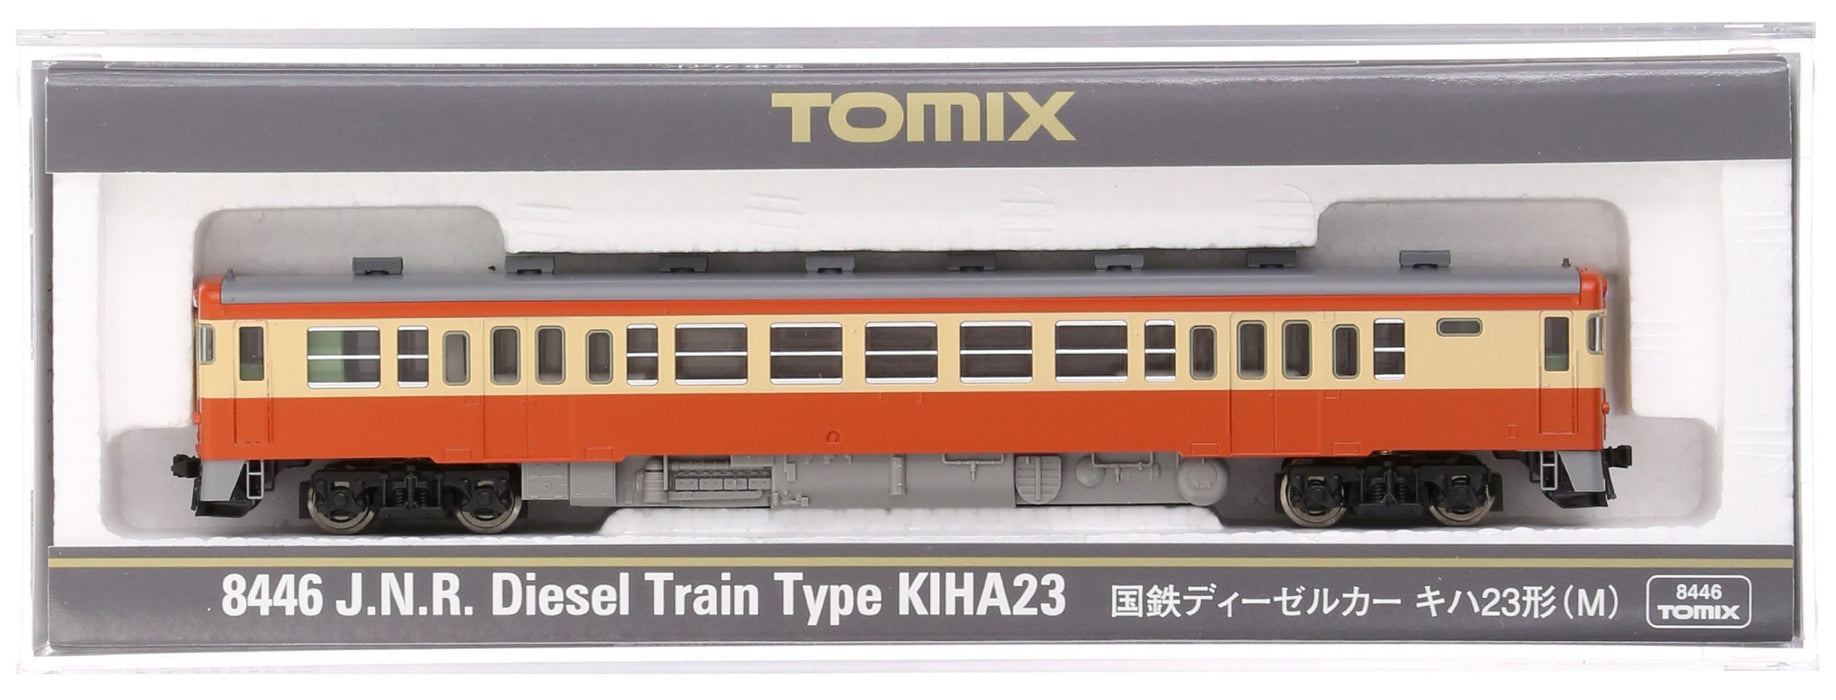 Tomytec Tomix N Gauge Kiha23 M 8446 Modèle de voiture ferroviaire diesel